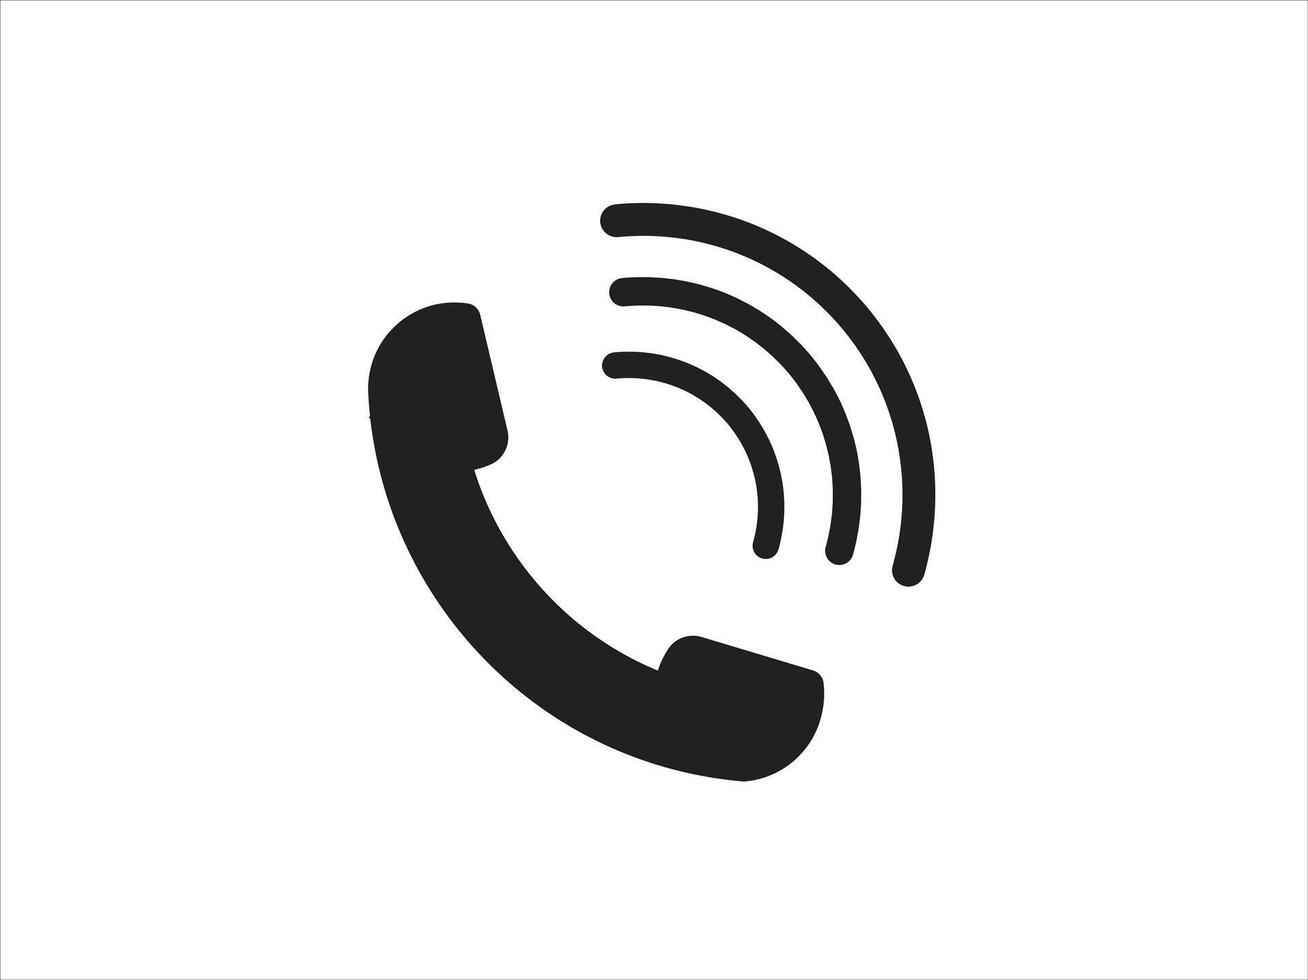 Phone call icon vector . Vector illustration